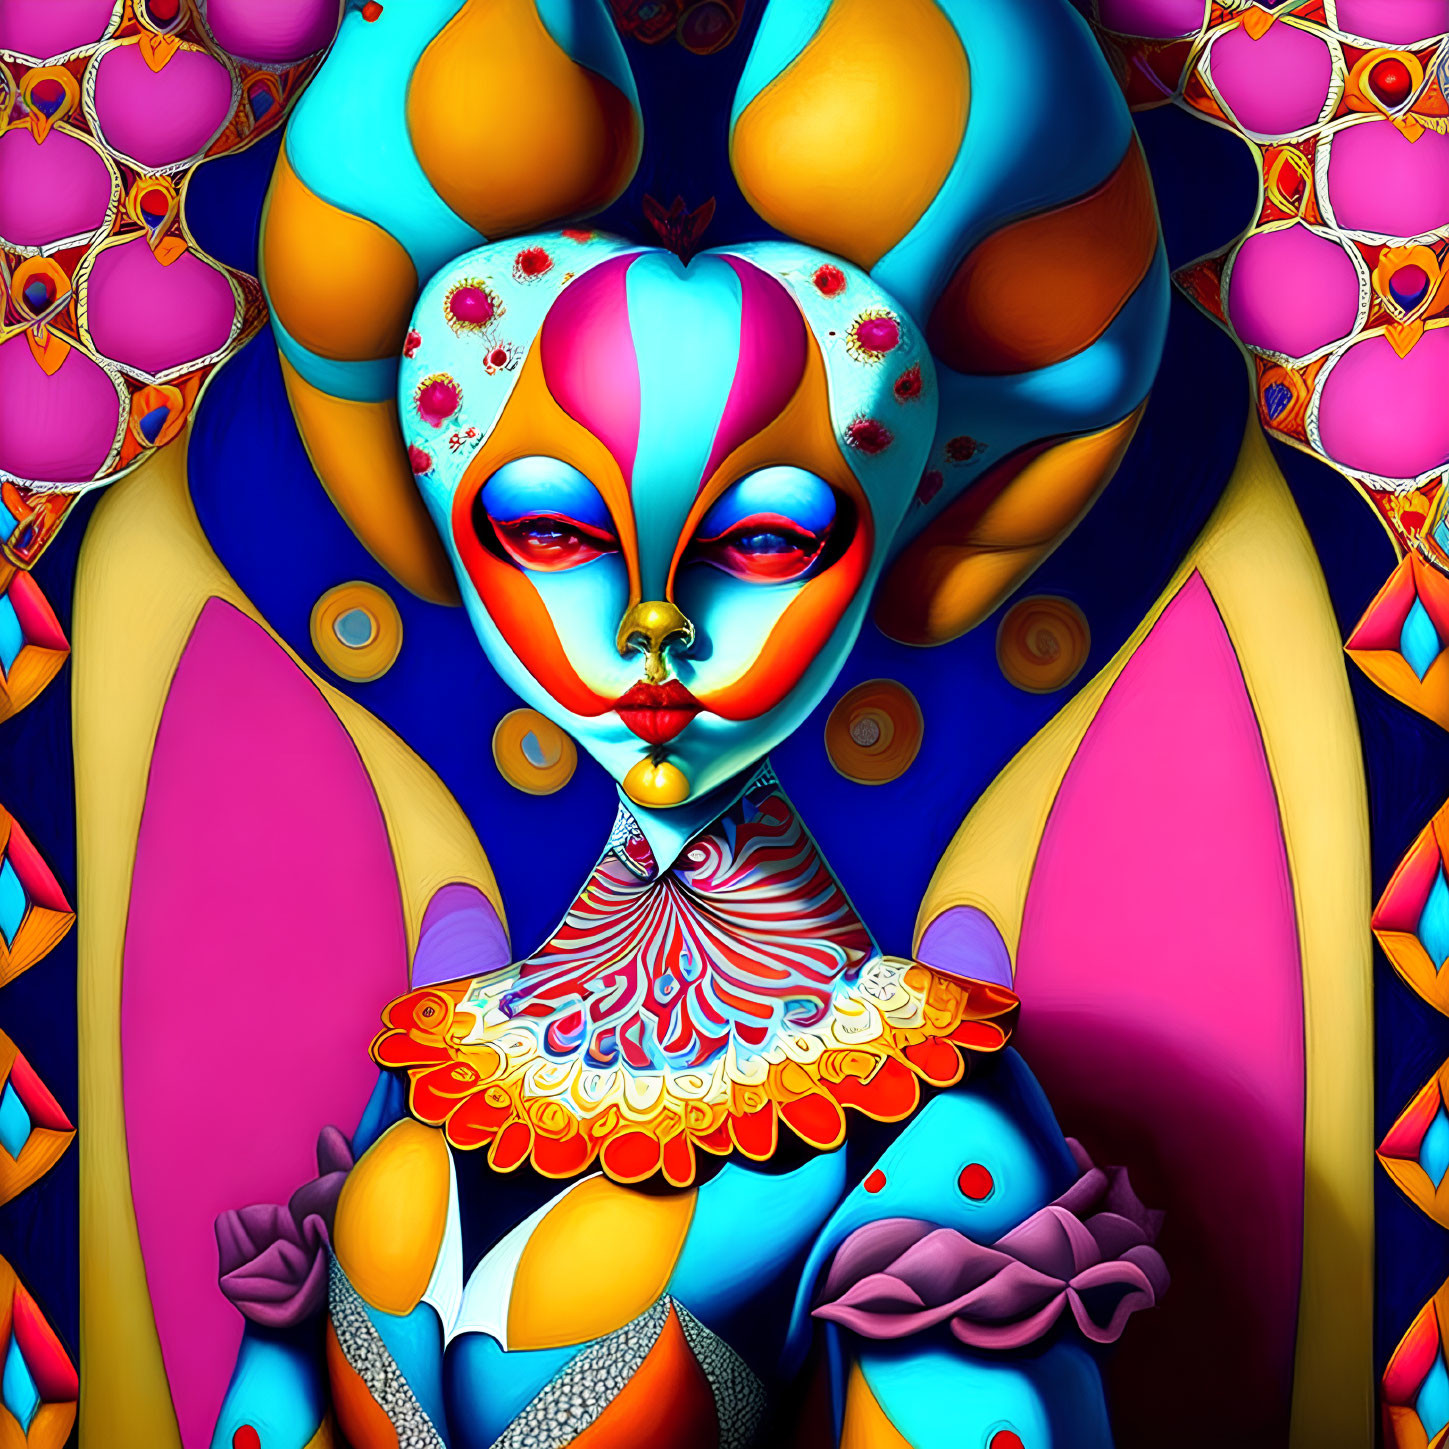 Vibrant surreal character in colorful digital artwork